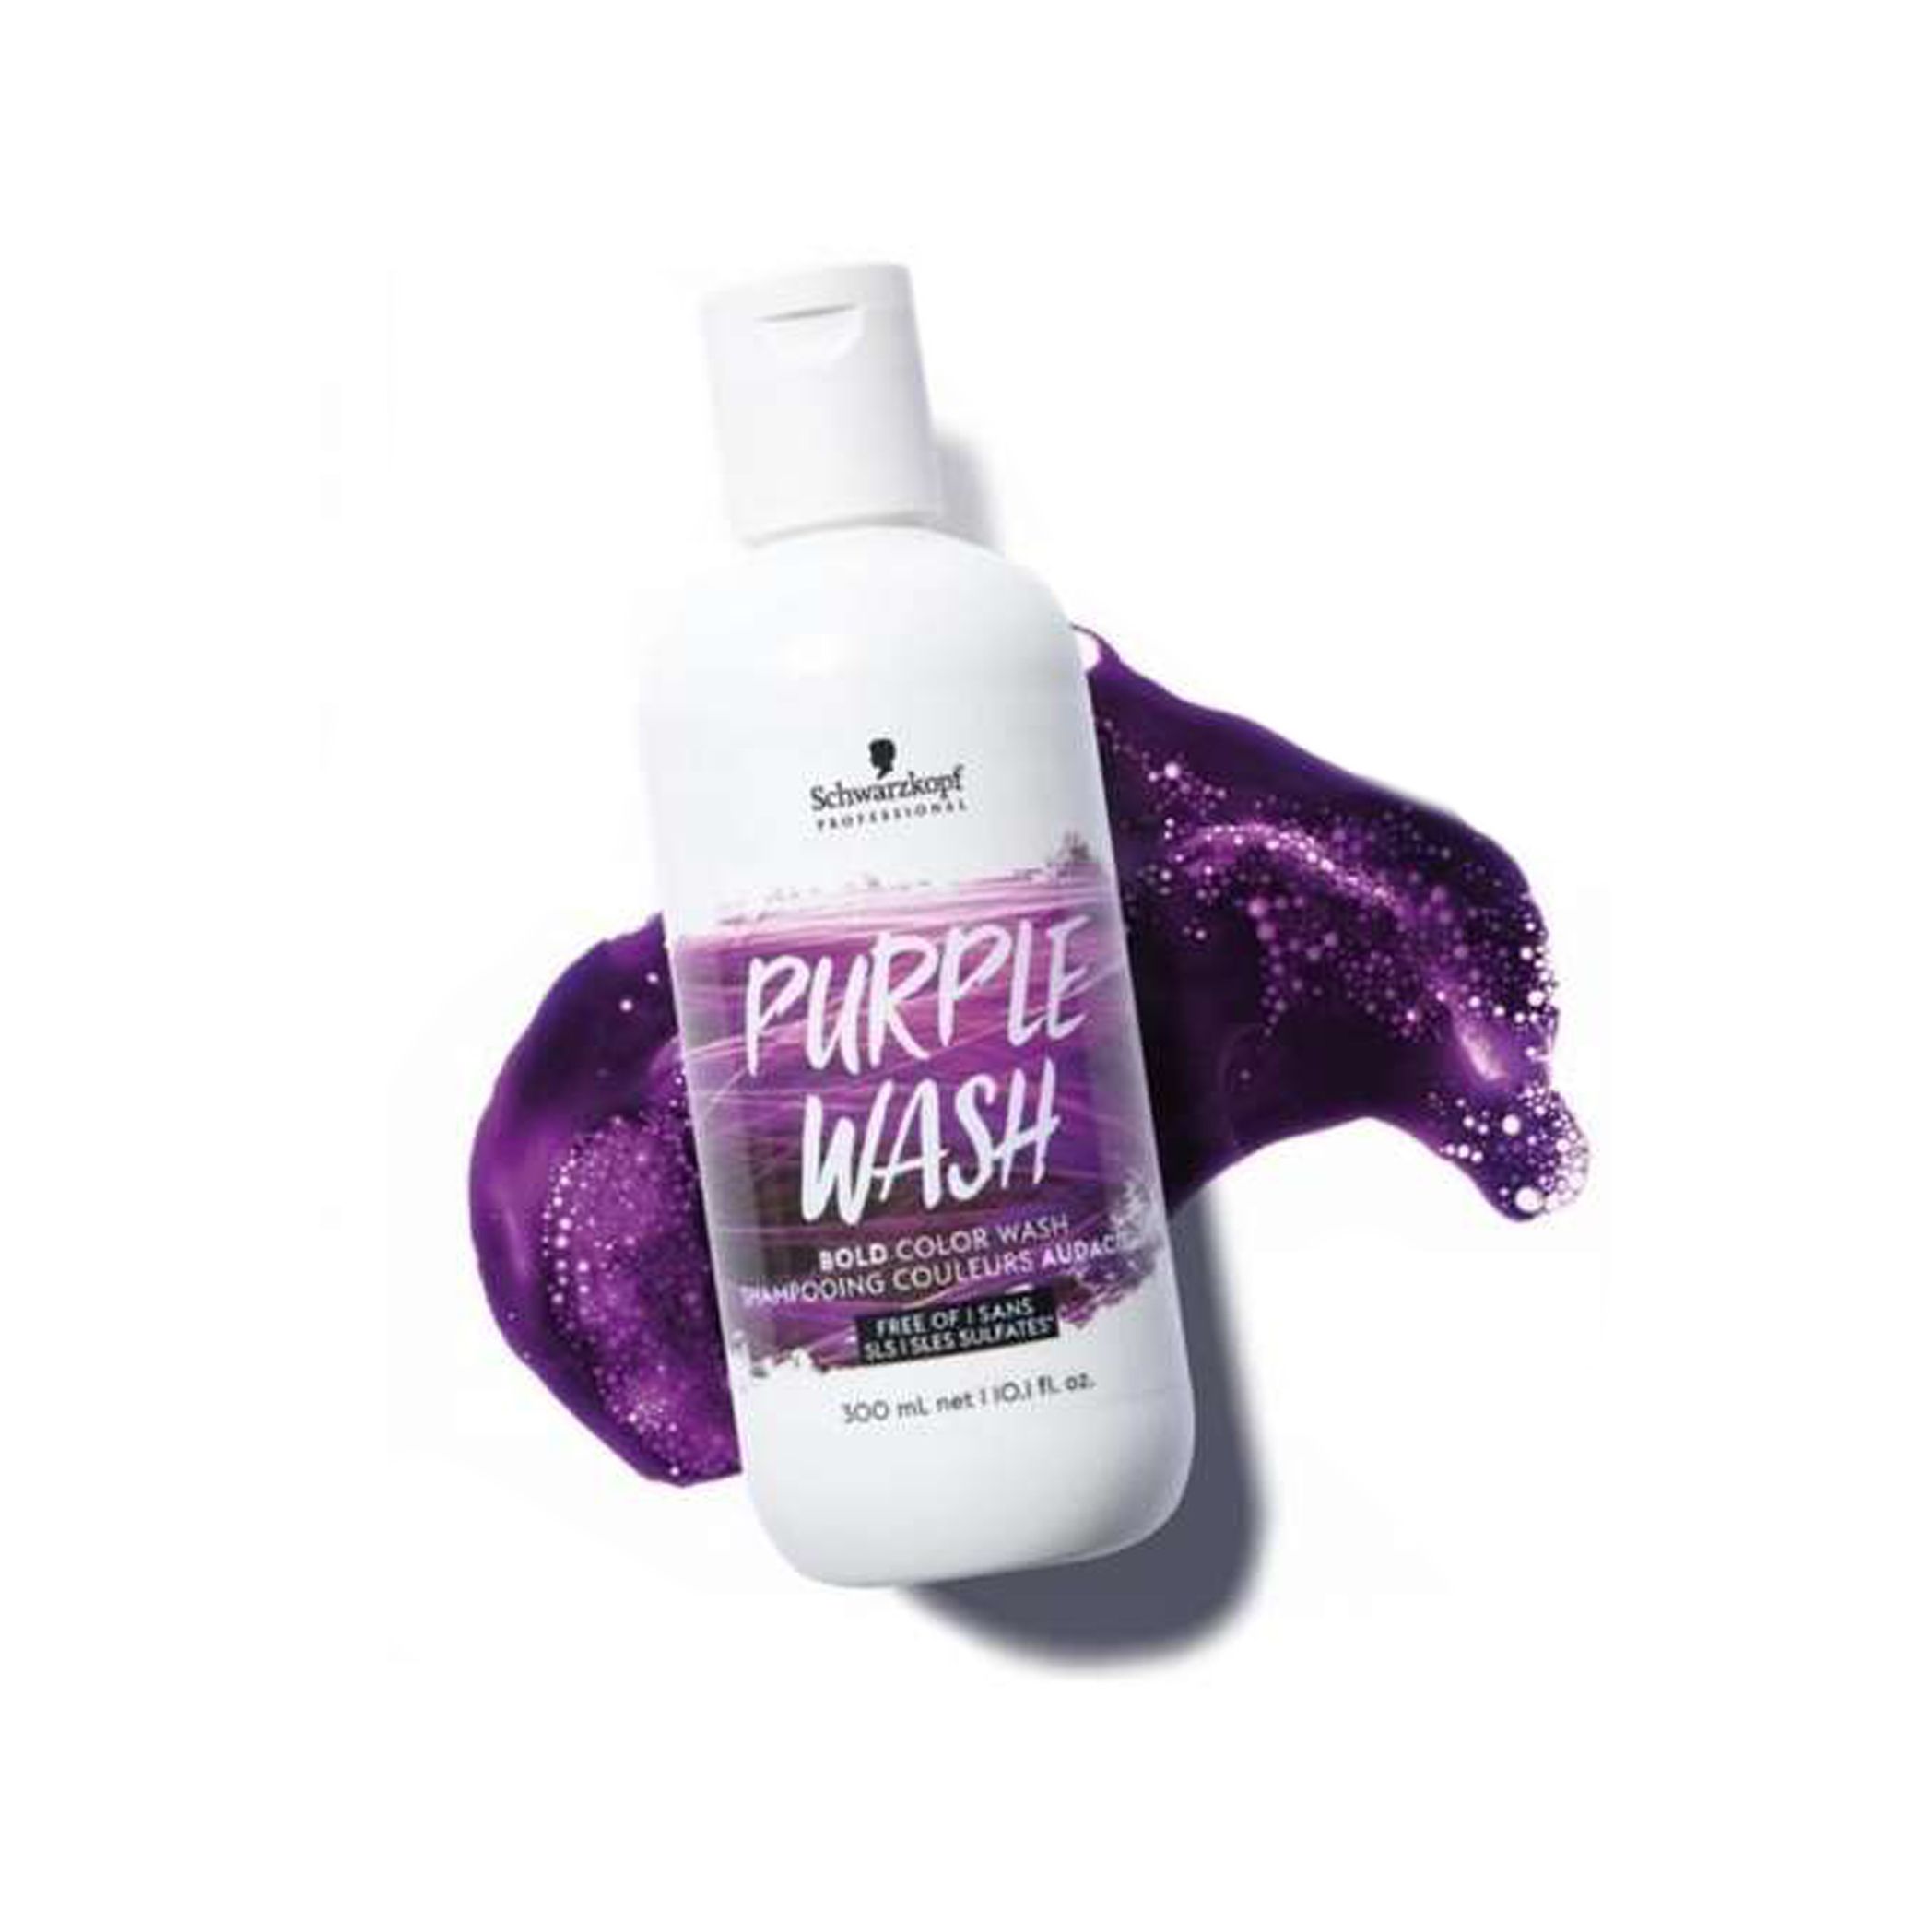 Champu violeta  – Color wash – 300ml | SCHWARZKOPF